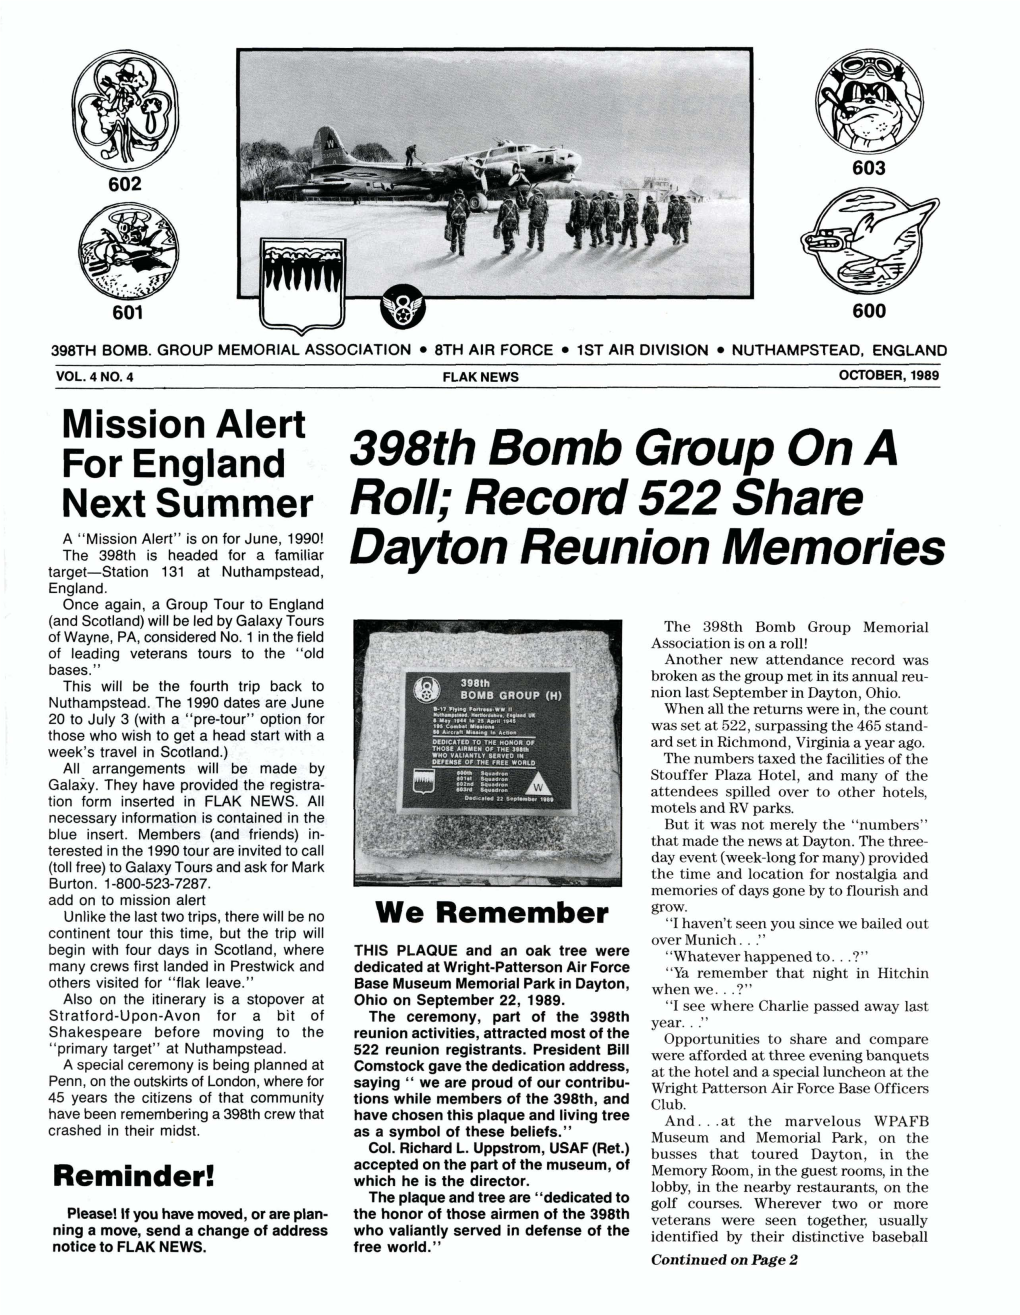 Record 522 Share Dayton Reunion Hl,Lmories